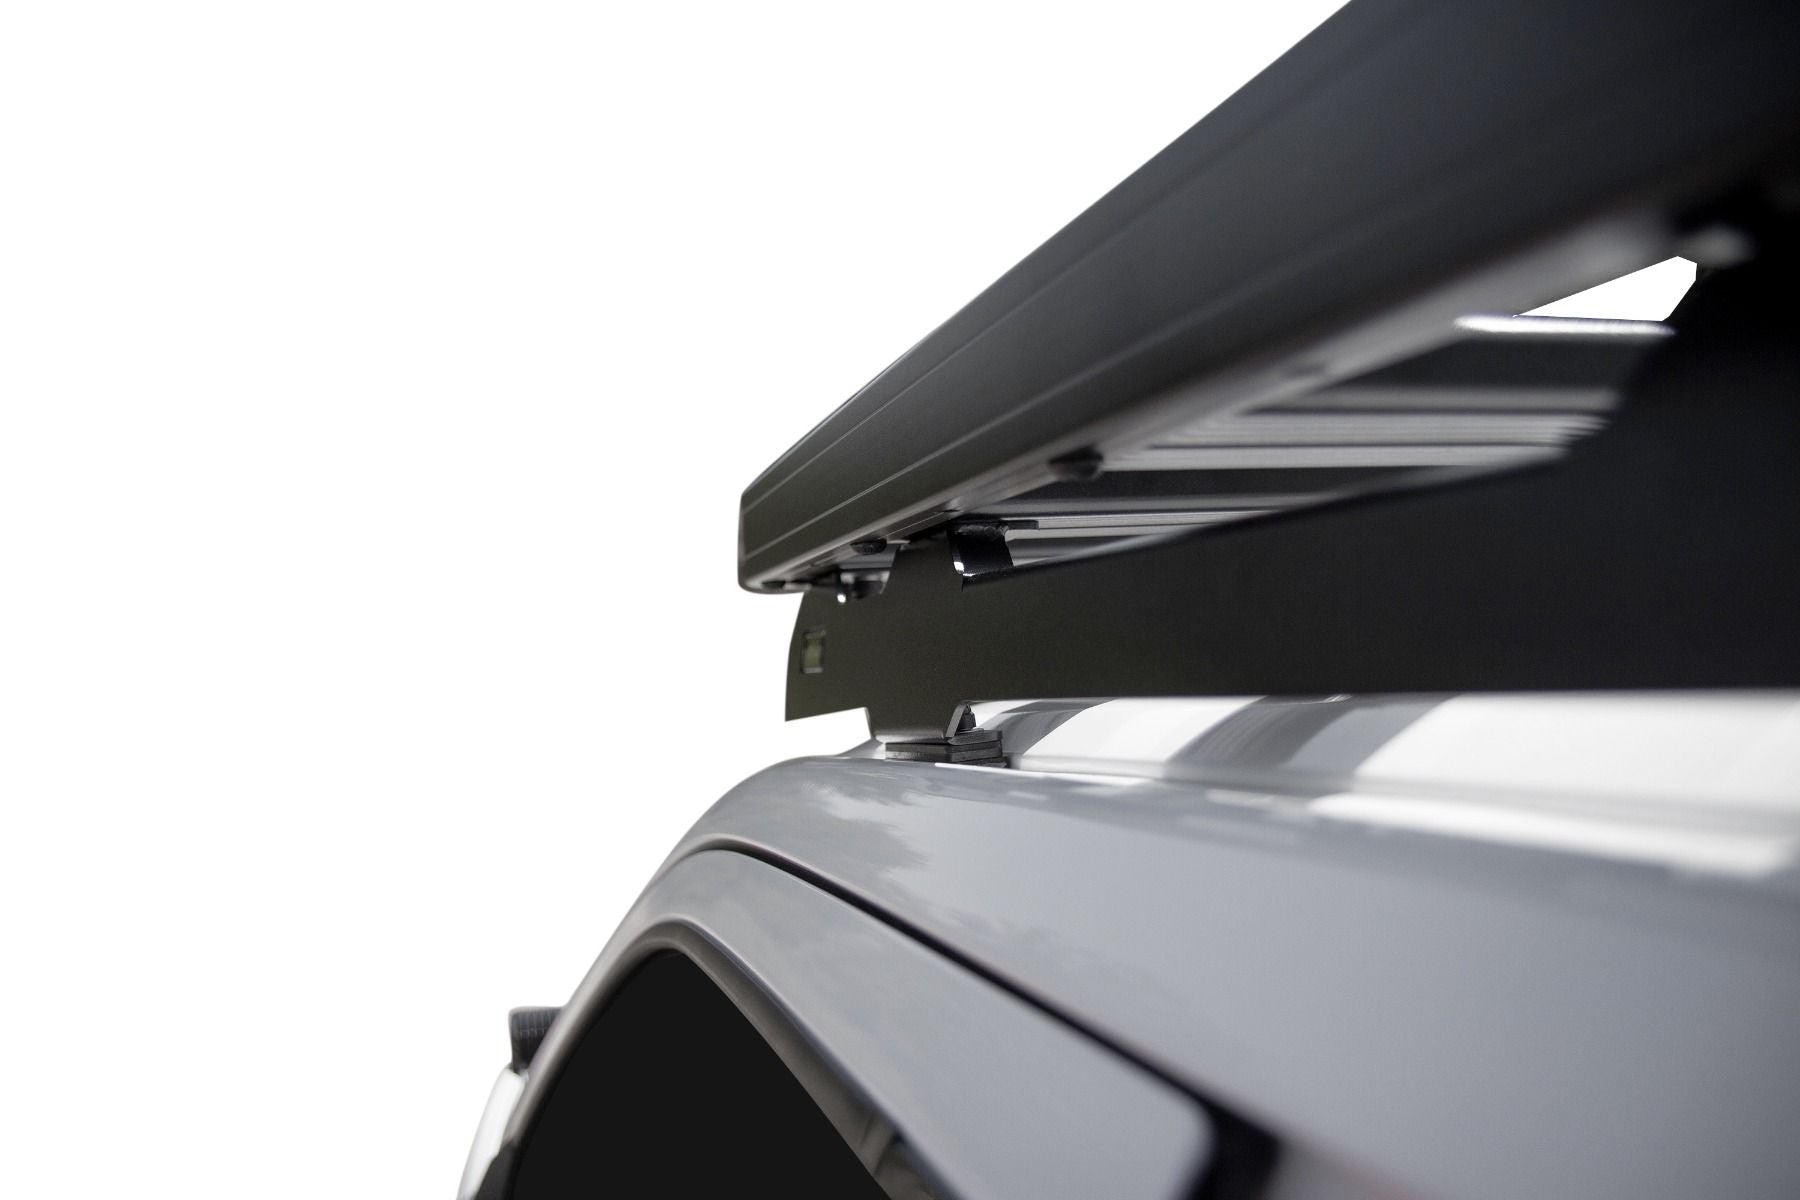 '09-20 Ford F150 Super Crew Slimline II Low Profile Roof Rack Kit Front Runner close-up